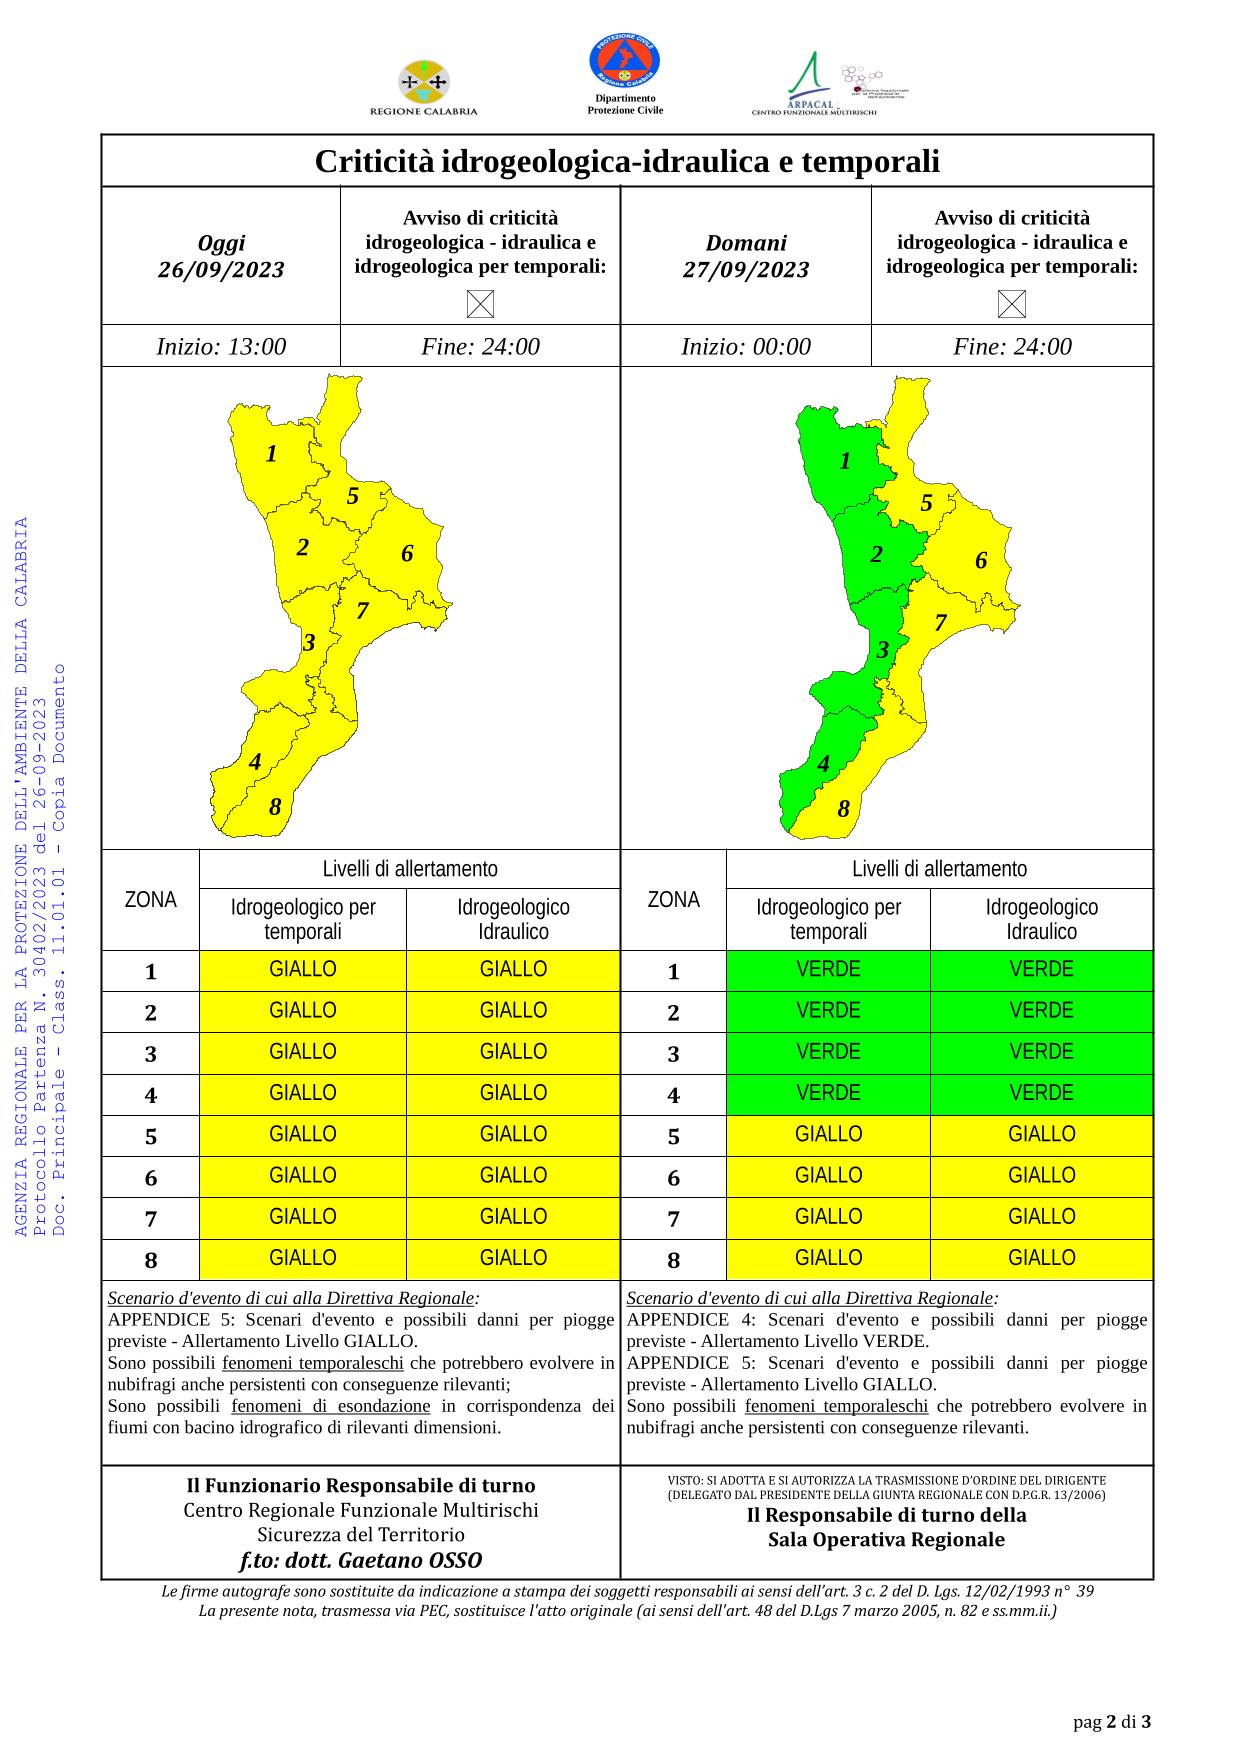 Criticità idrogeologica-idraulica e temporali in Calabria 26-09-2023